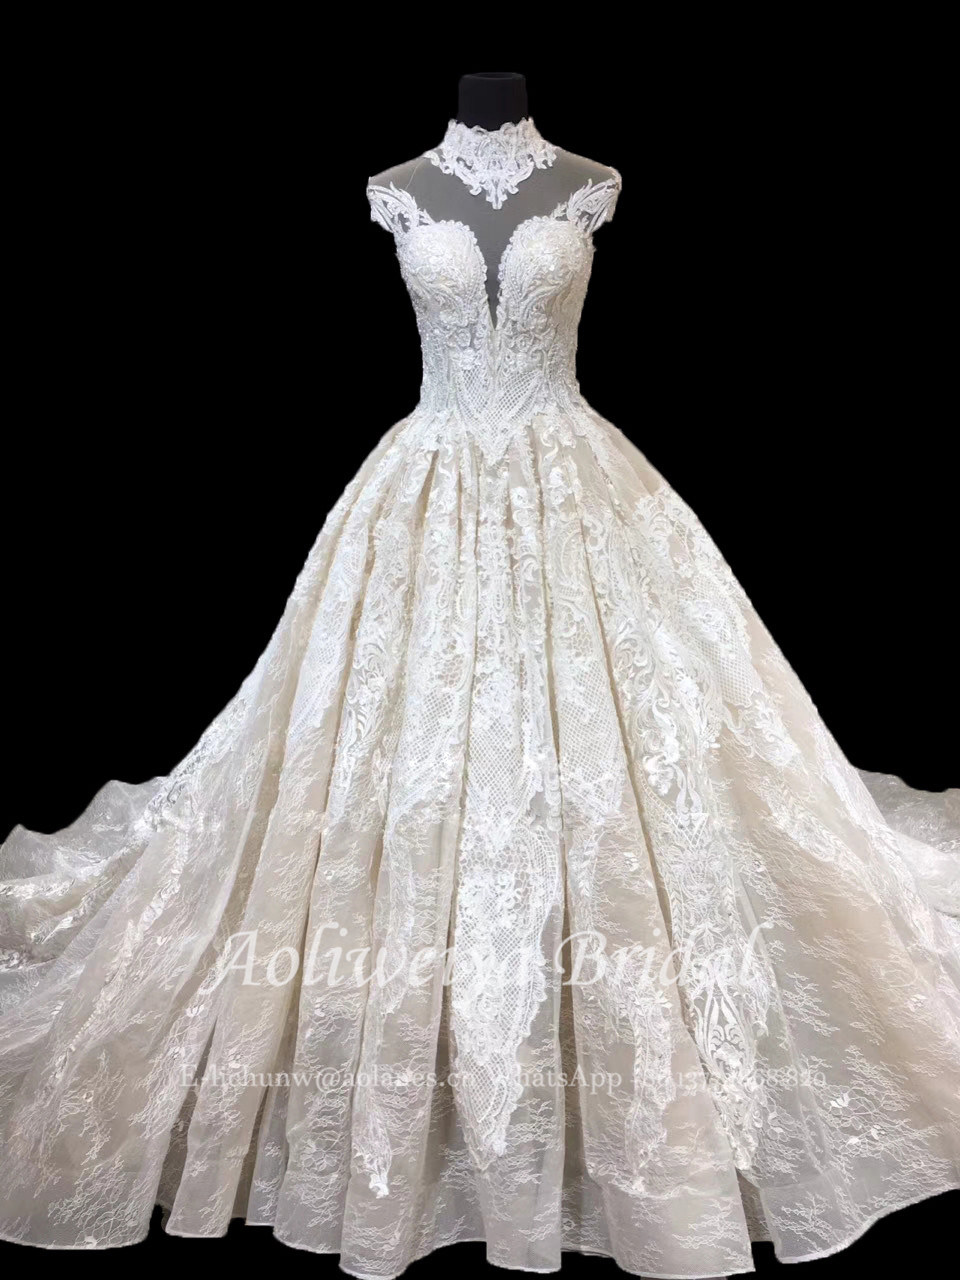 Aolanes Plain Lace Mermaid Strapless Wedding Dress 010515